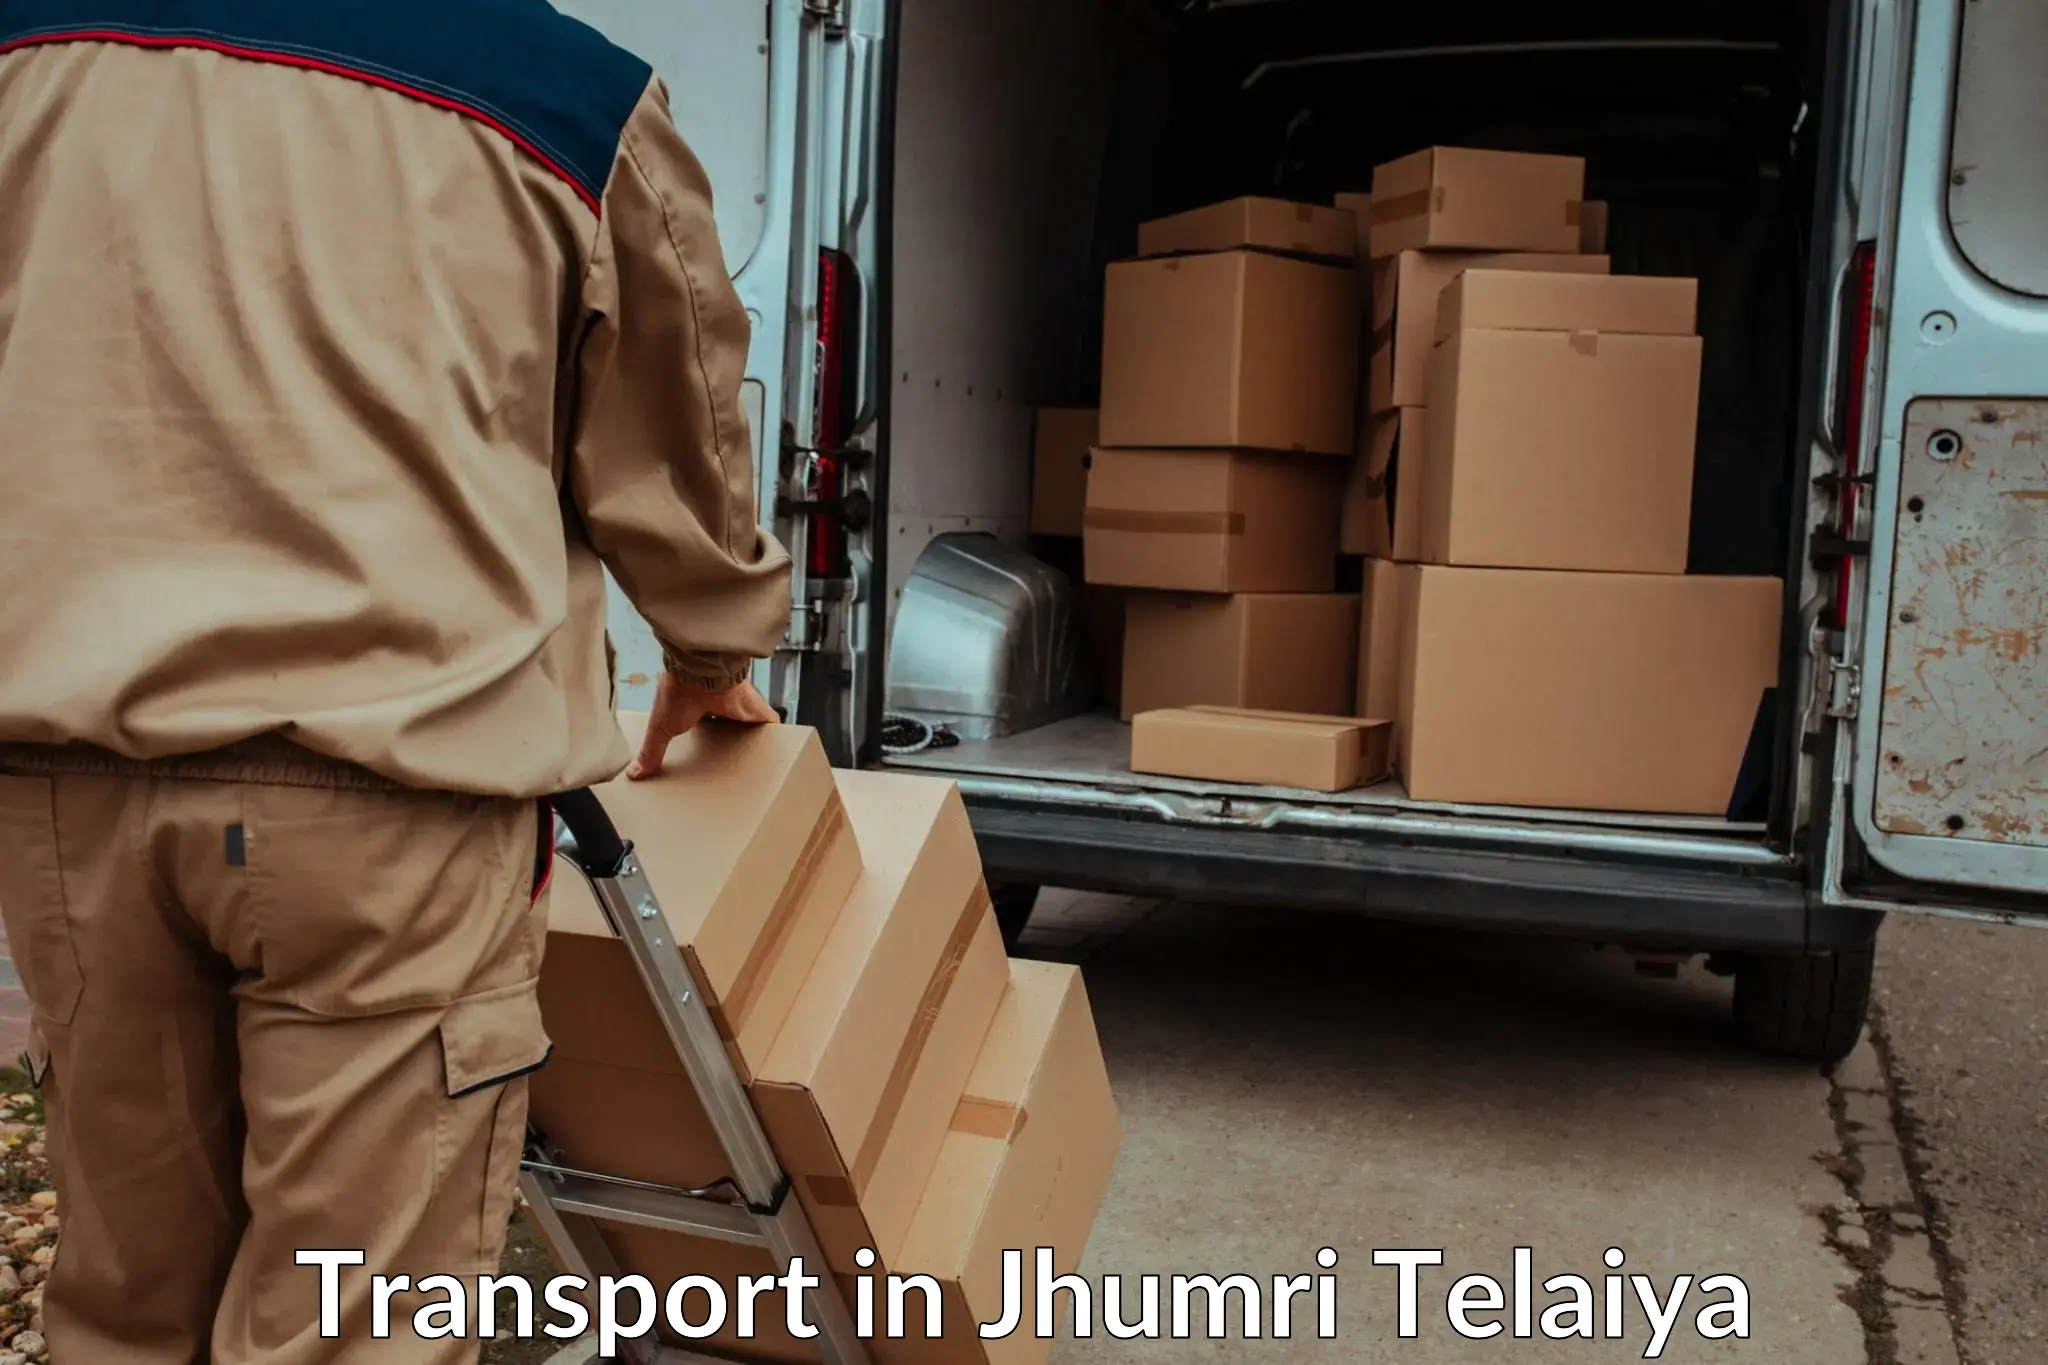 Transportation services in Jhumri Telaiya